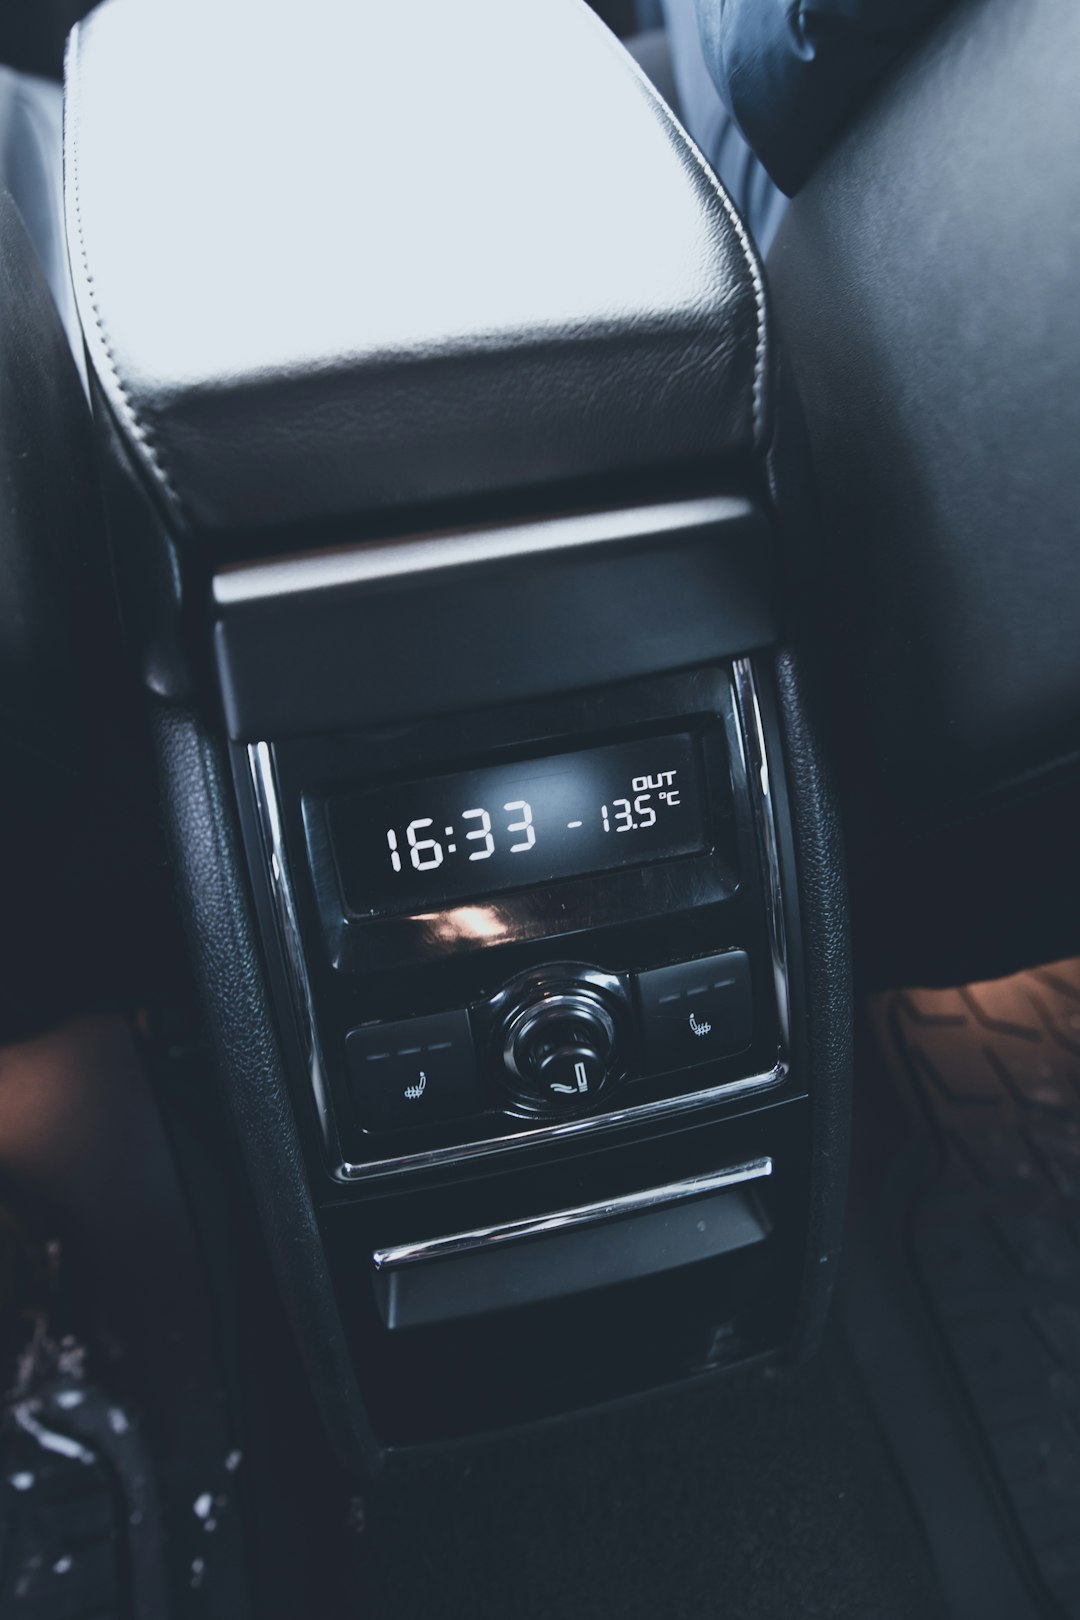 black digital car center console displaying 16:33